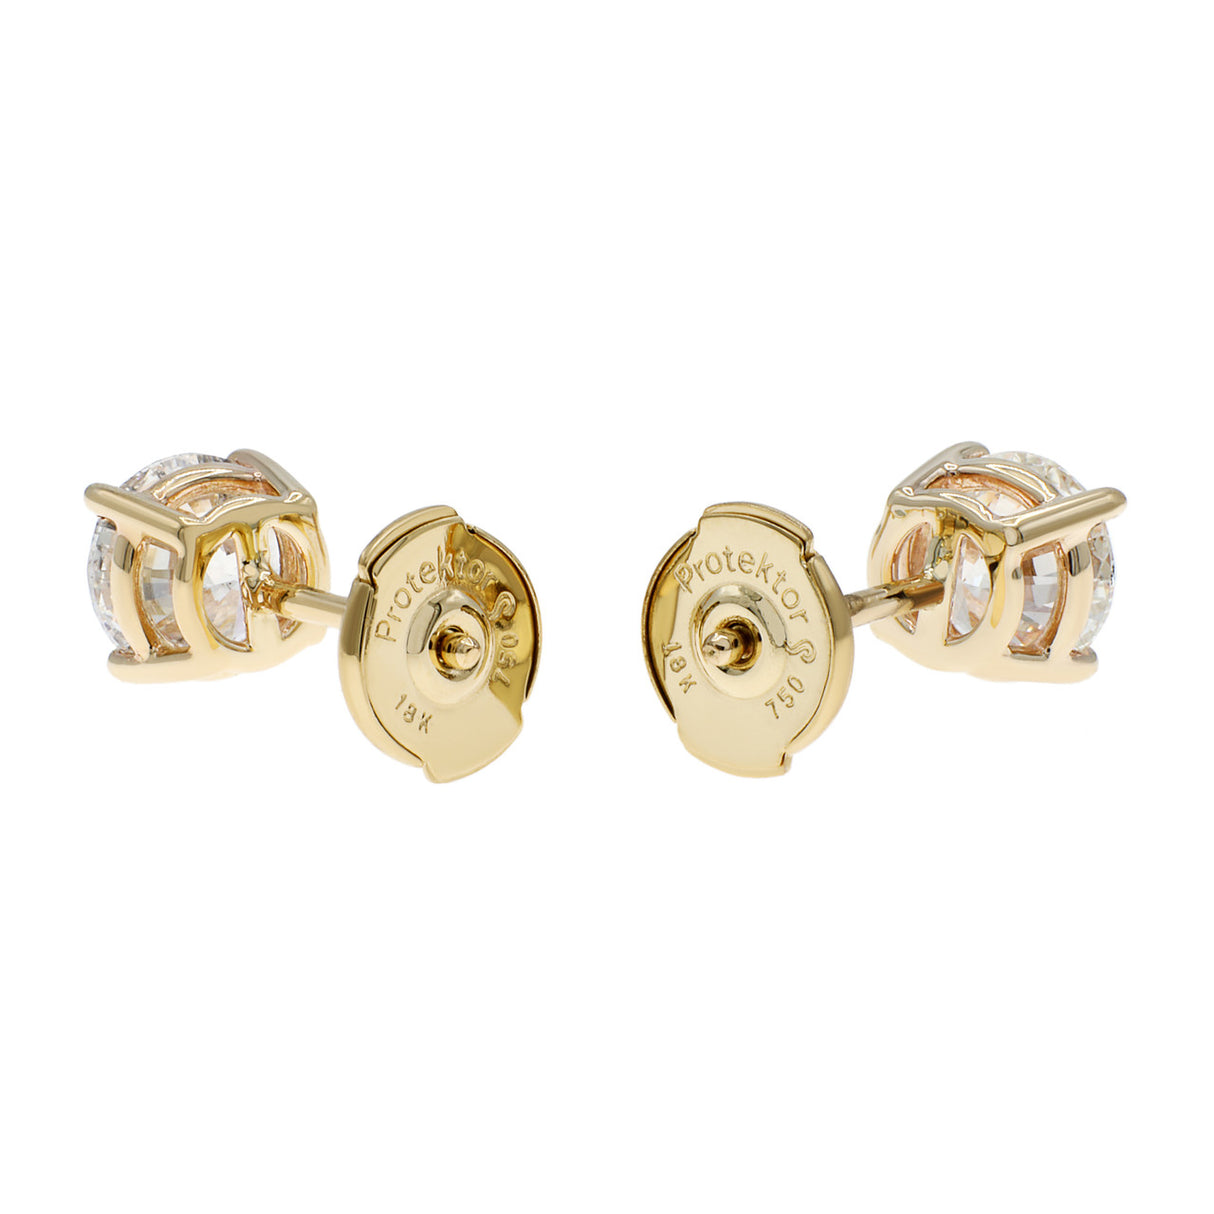 14K Yellow Gold 1.35 Carat Diamond Stud  Earrings